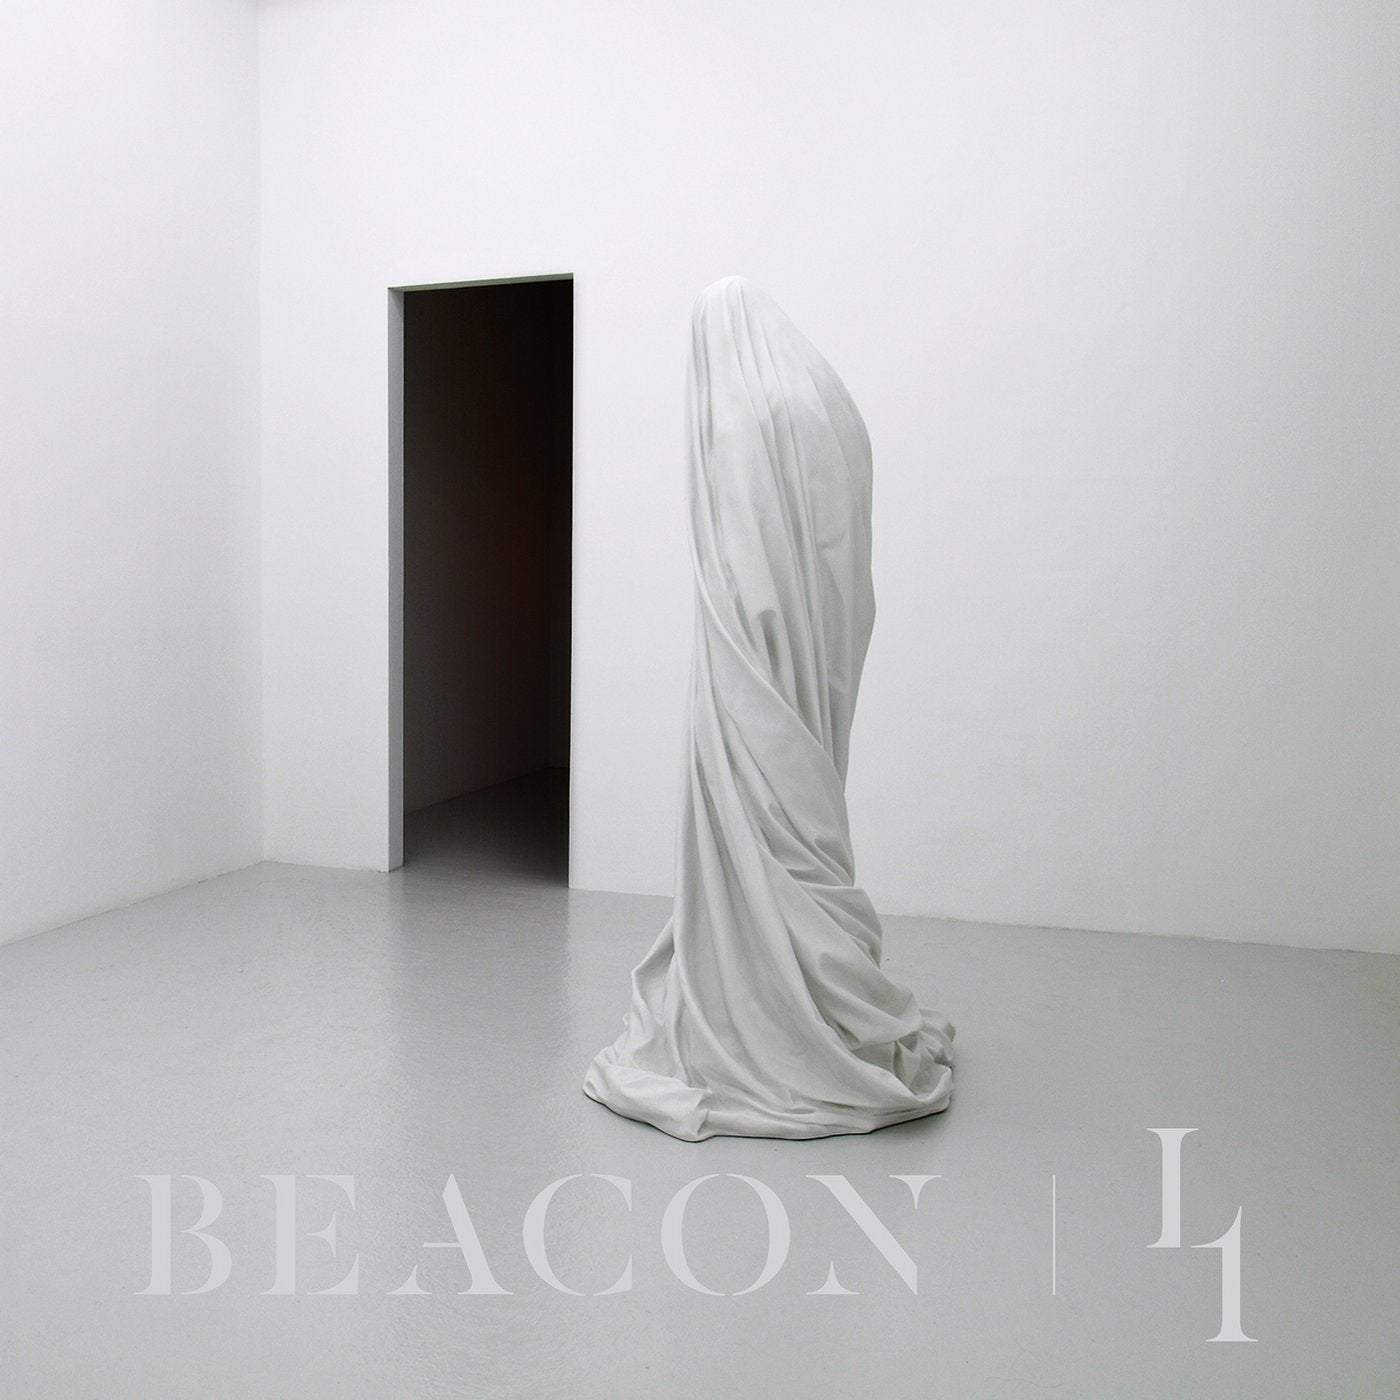 Download Beacon - L1 on Electrobuzz